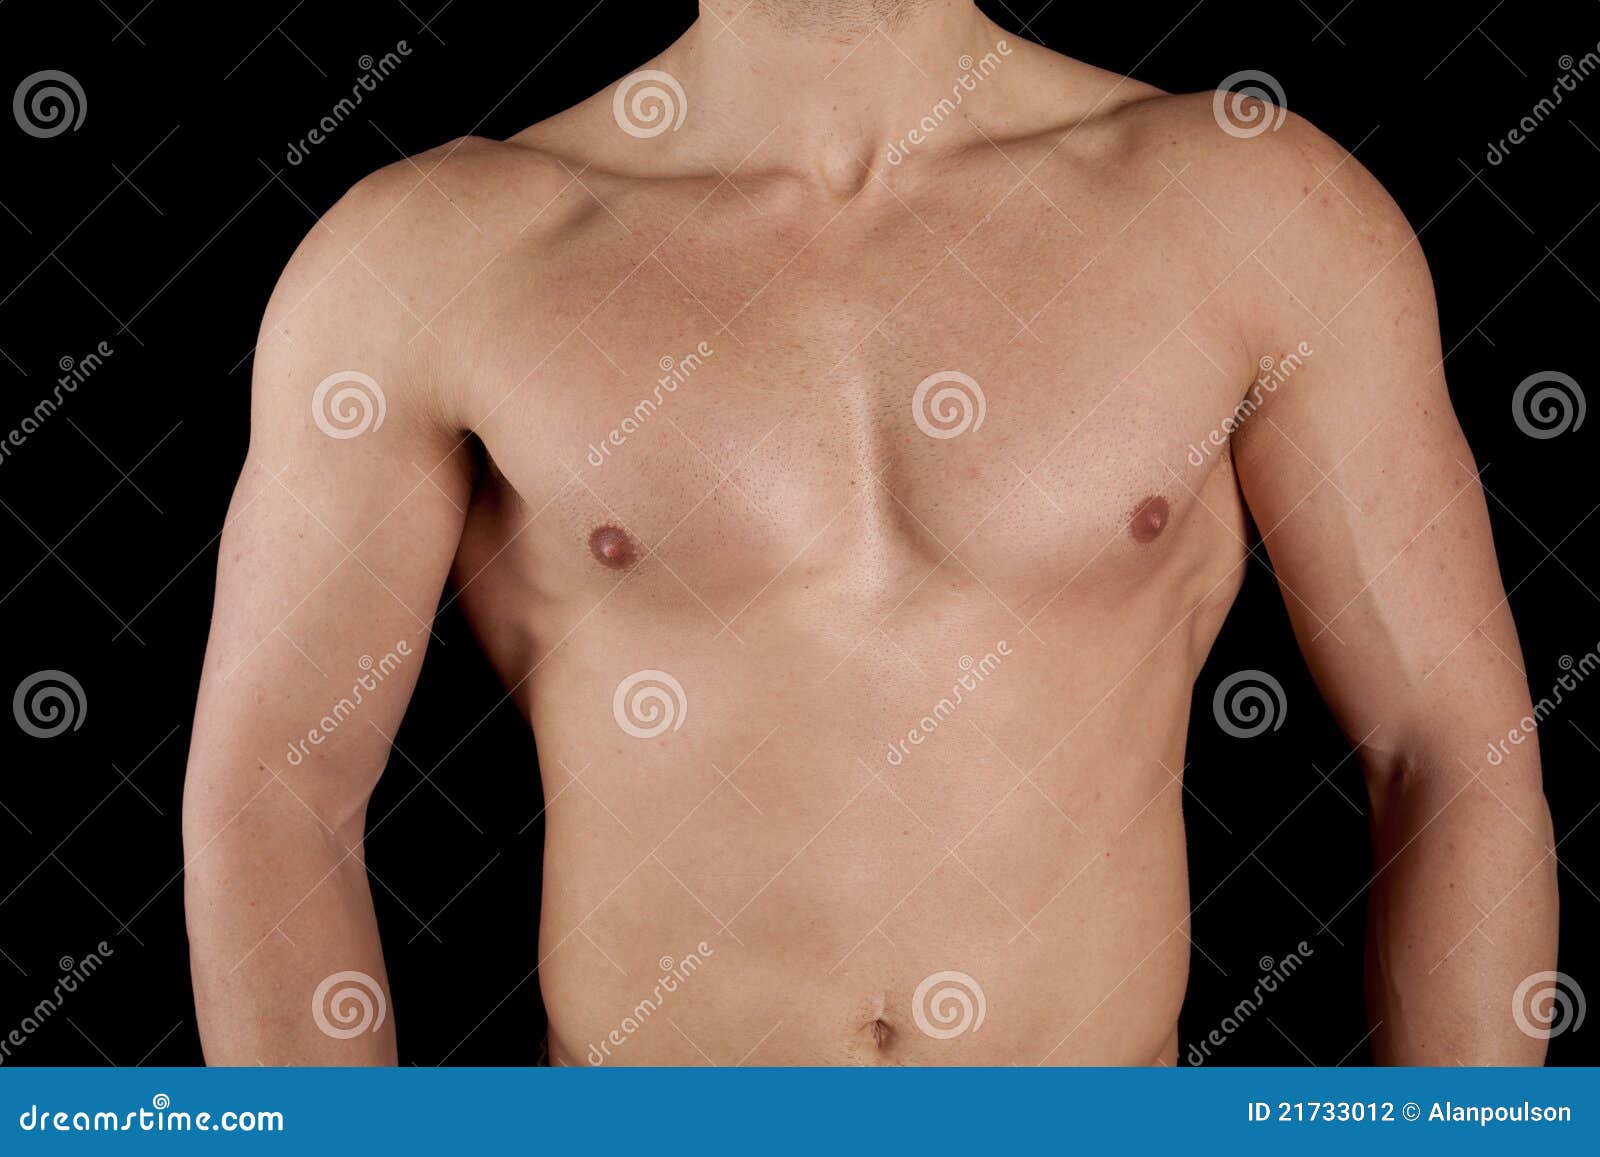 шишка в правой груди у мужчин фото 106